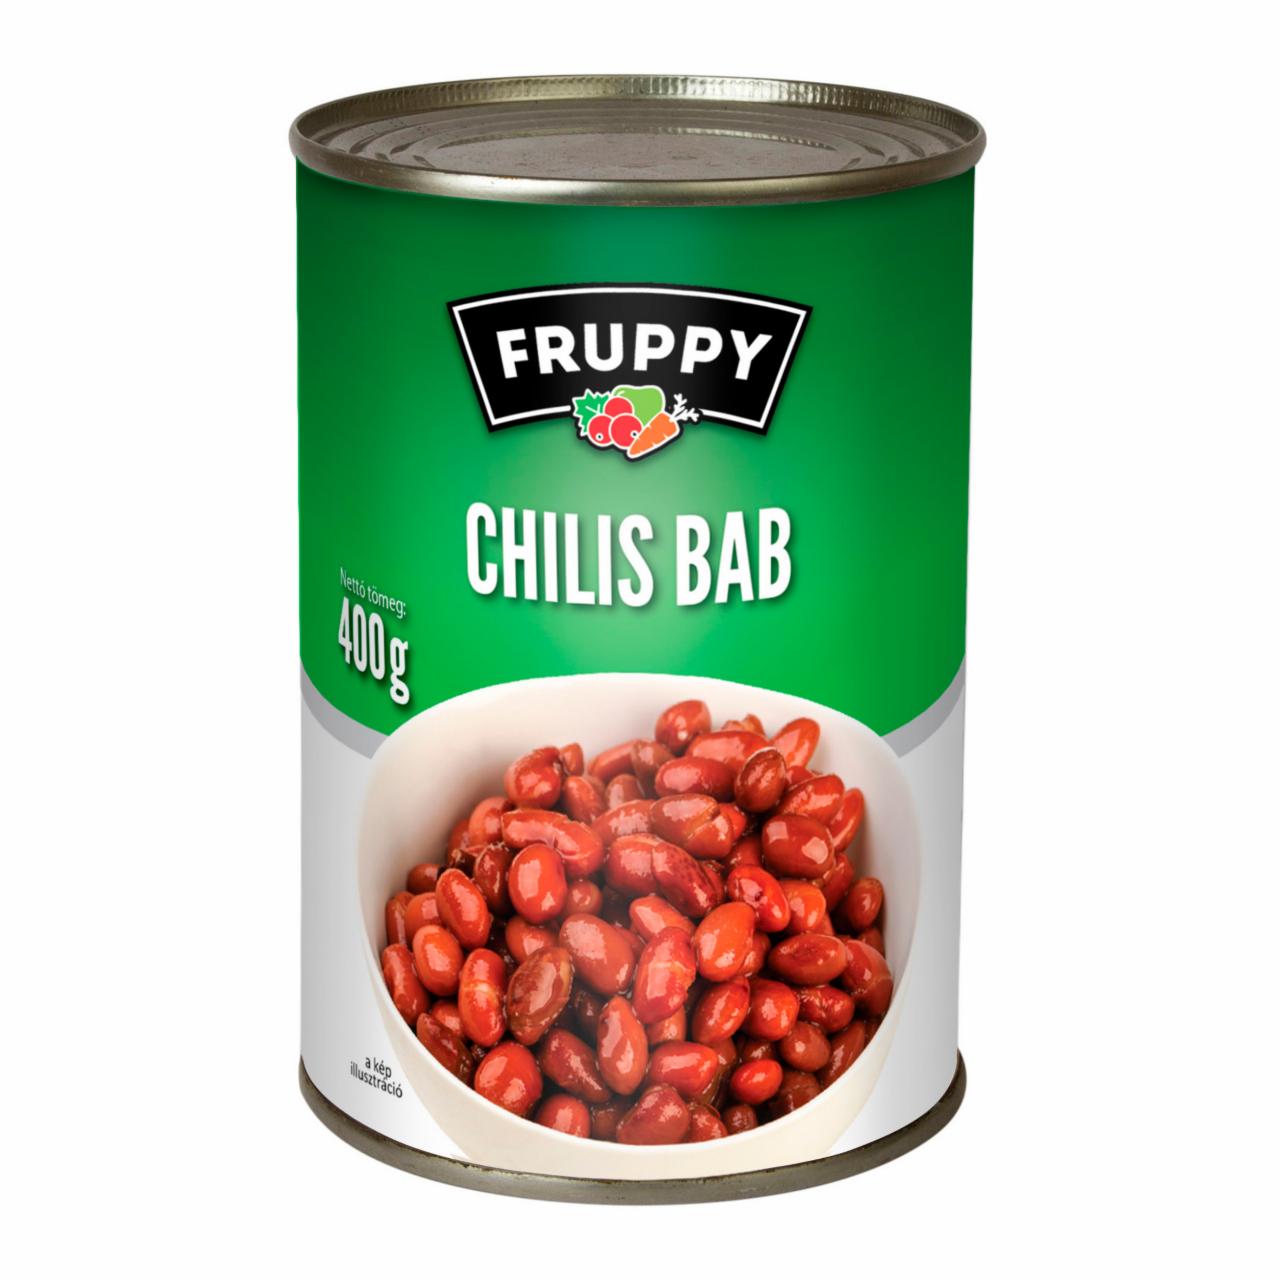 Képek - FRUPPY bab chilis-paradicsomos 400 g